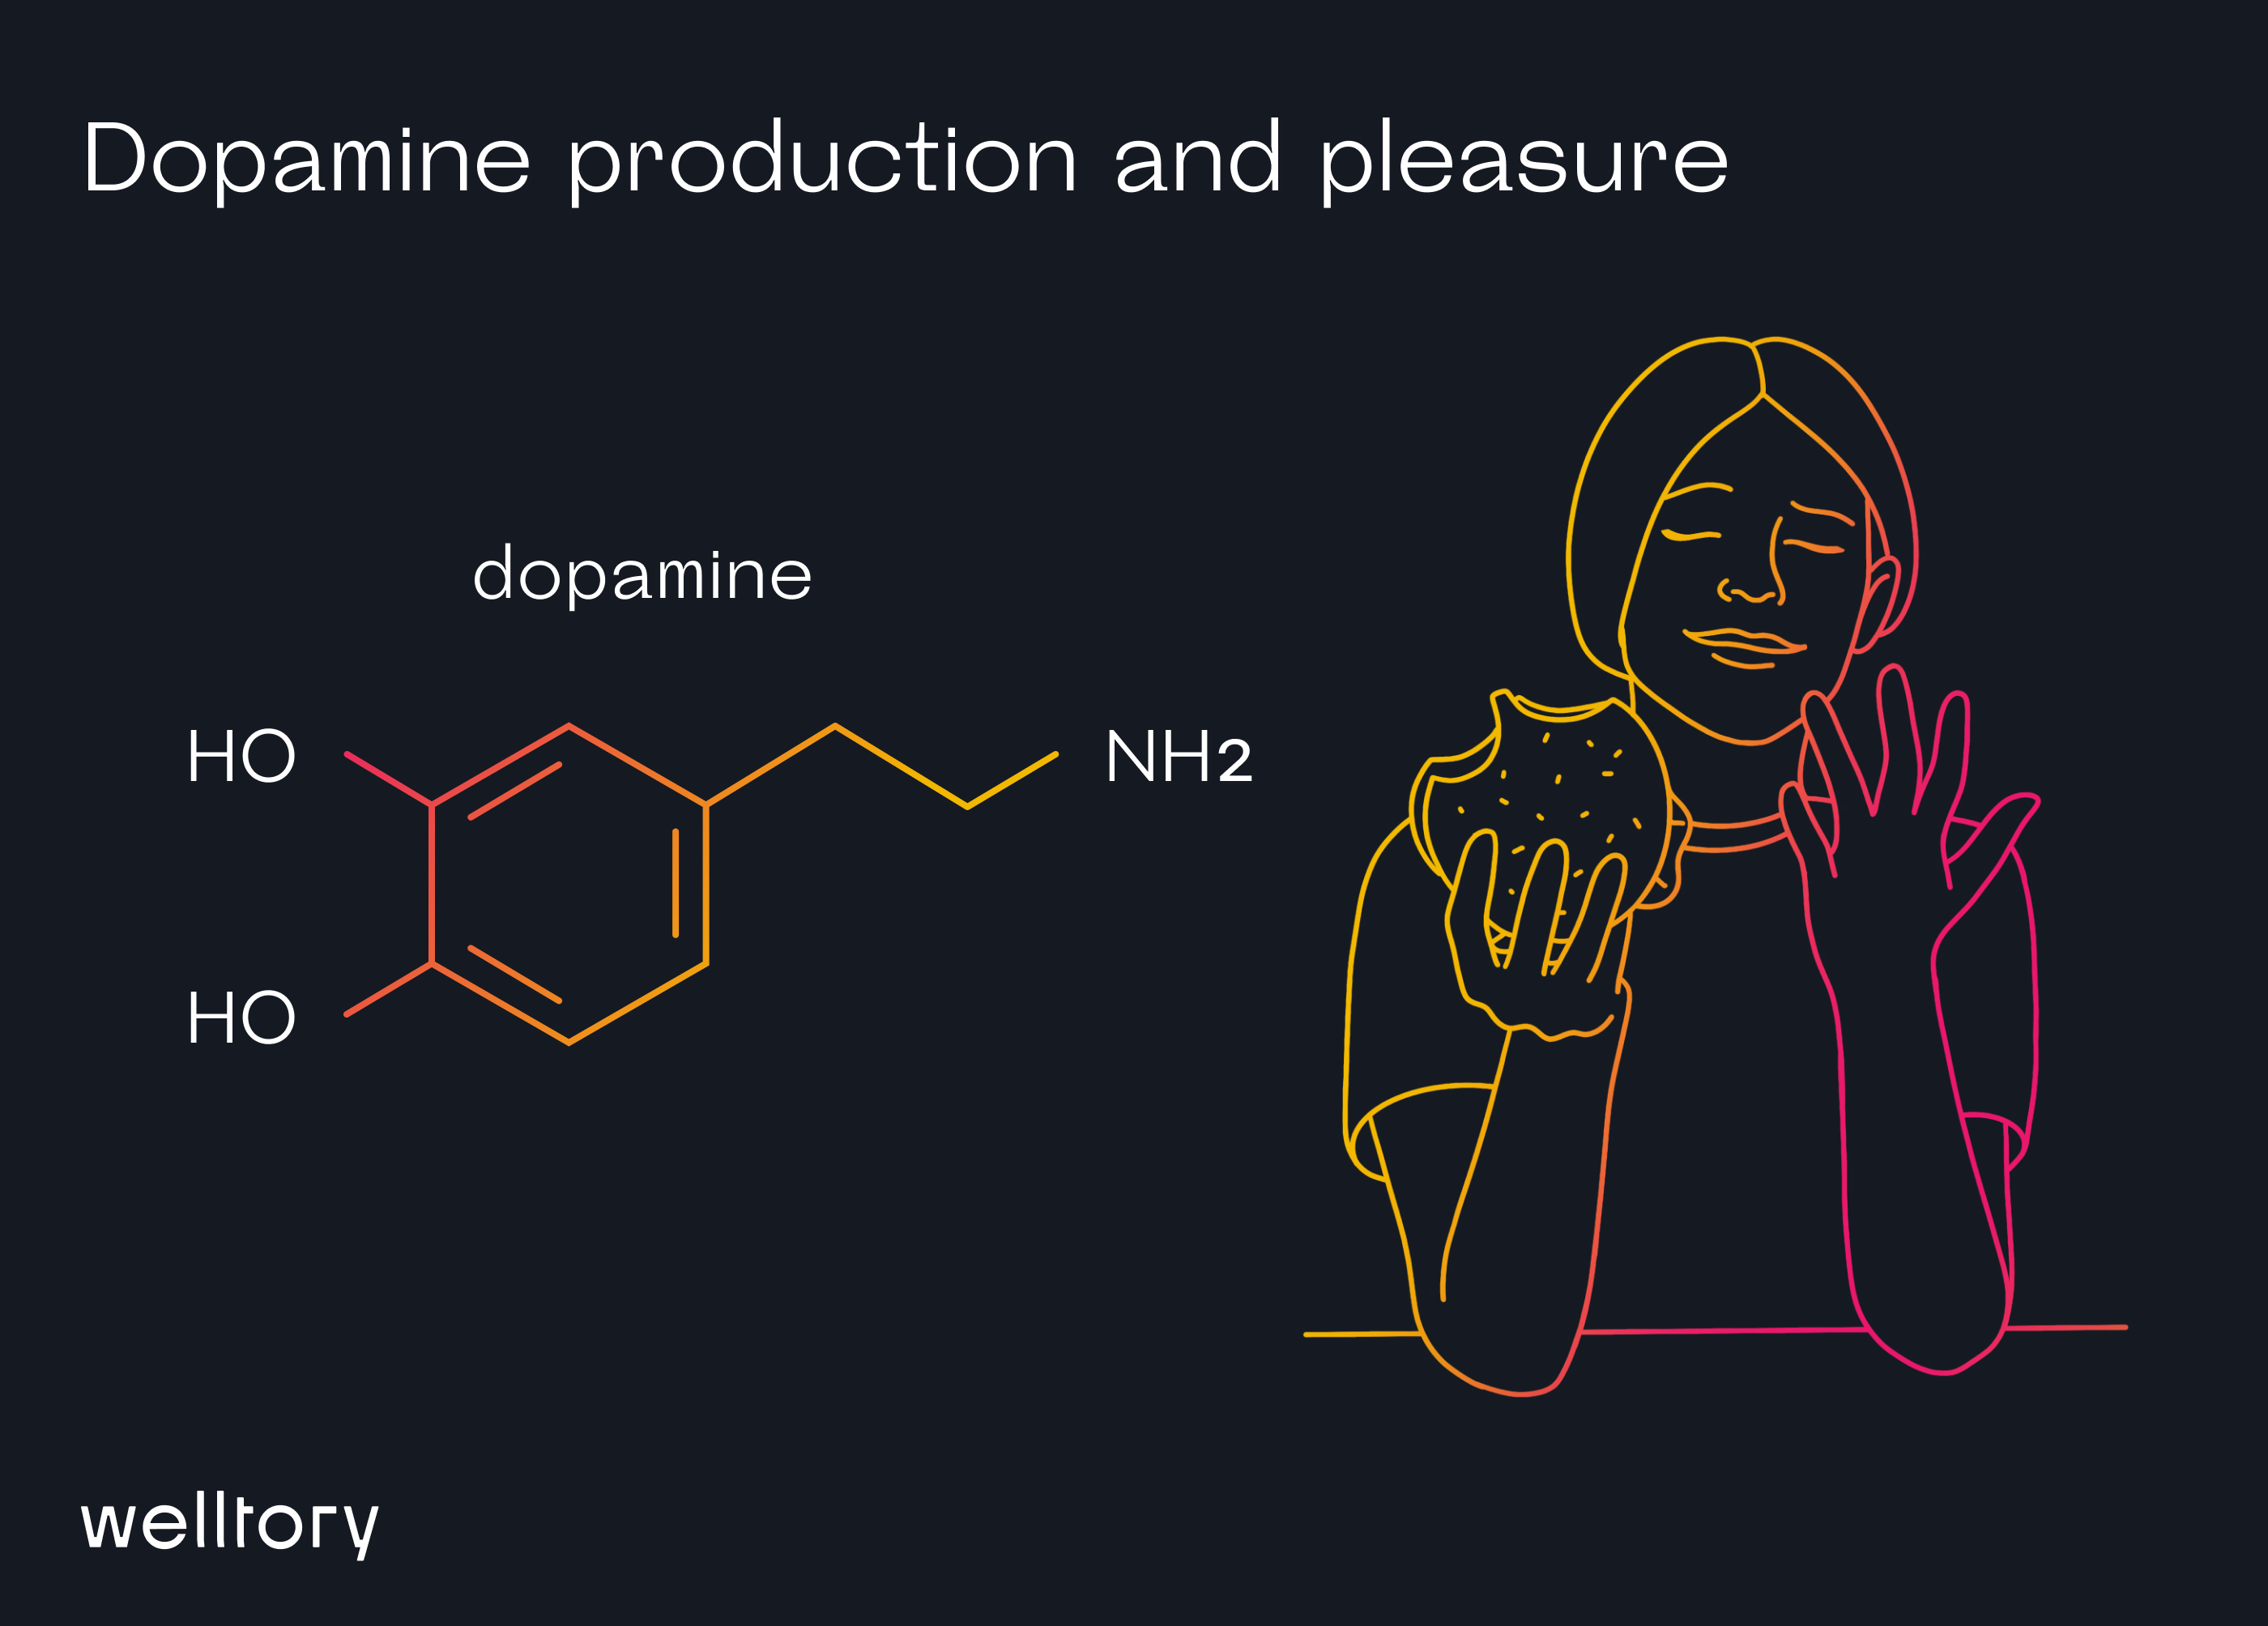 dopamine pain and pleasure